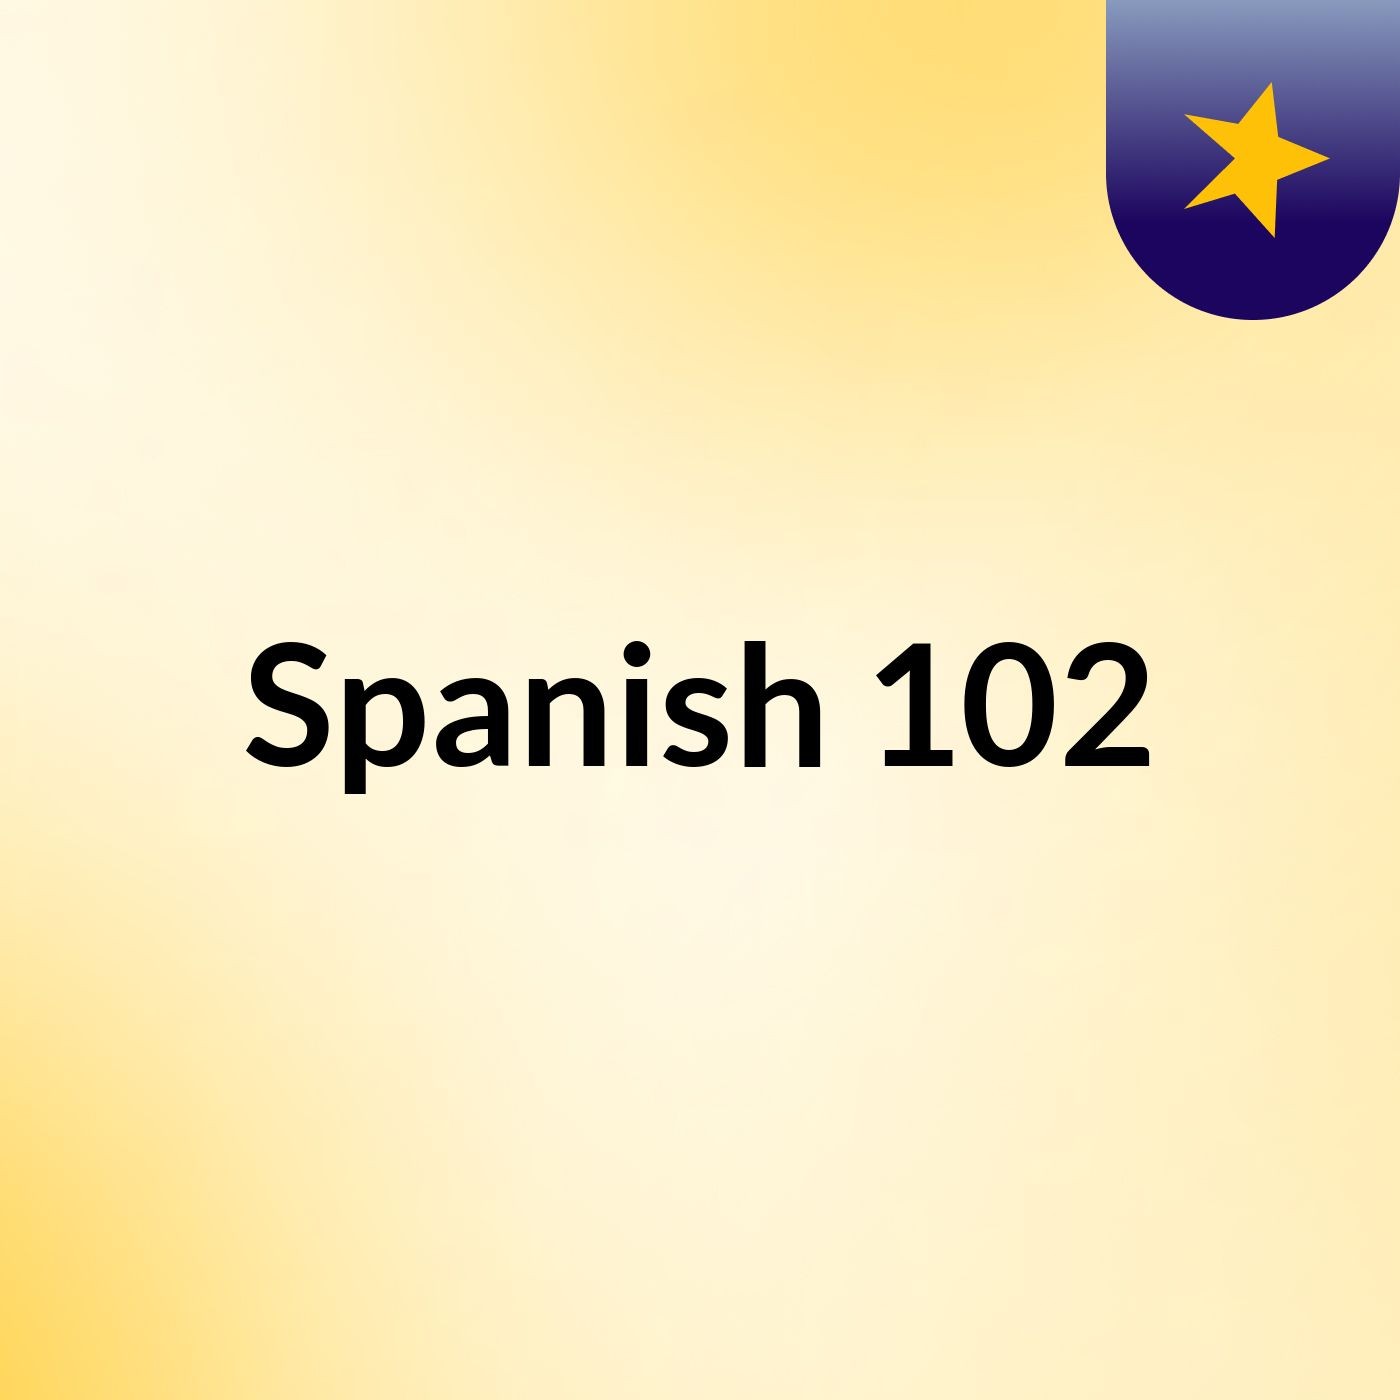 Podcast 1 Spanish 201 - 2:2:19, 7.11 PM